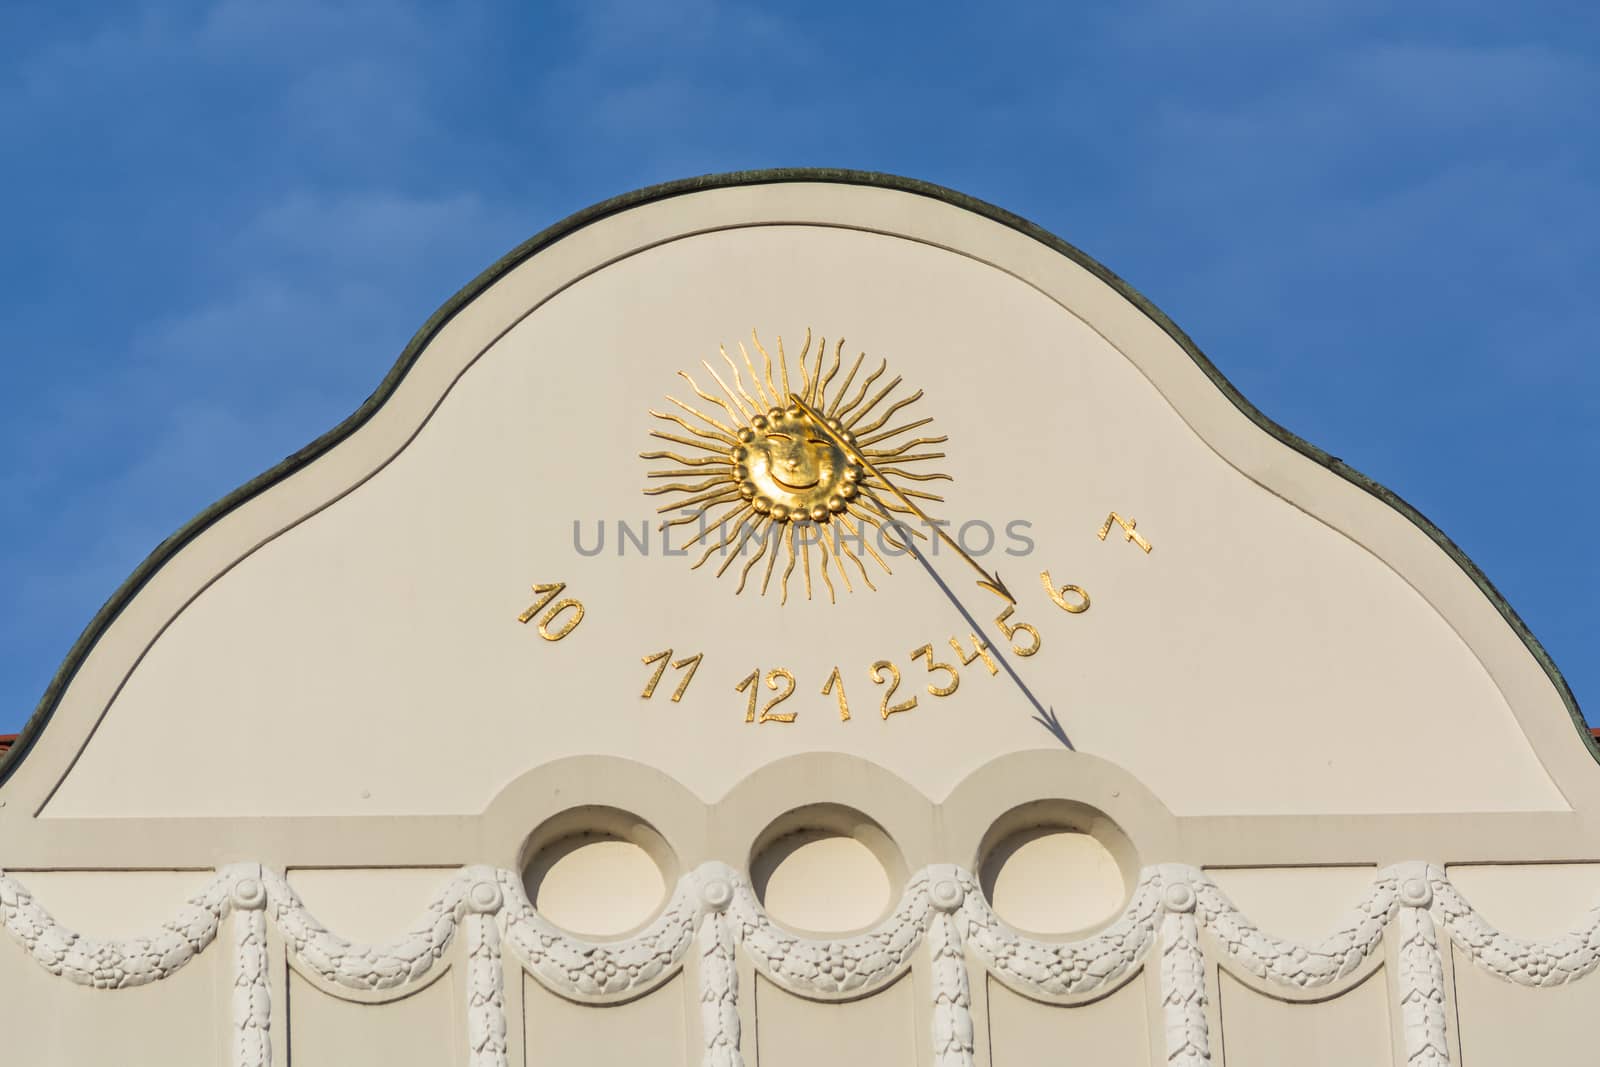 Sundial clock on a house facade by JFsPic